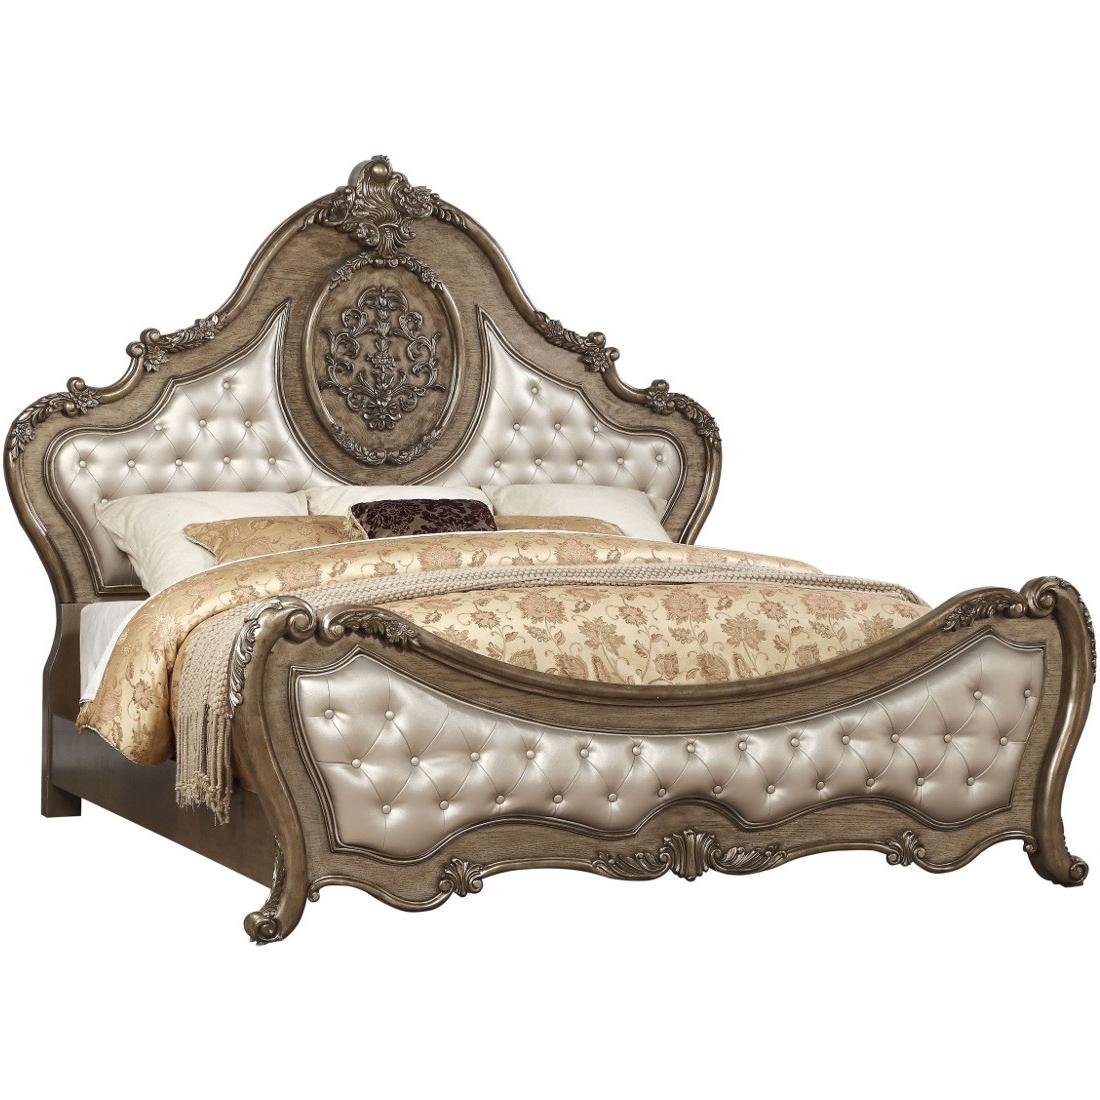 

    
Luxury Vintage Oak Stultz King Tufted Upholstered Standard Bed Classic
